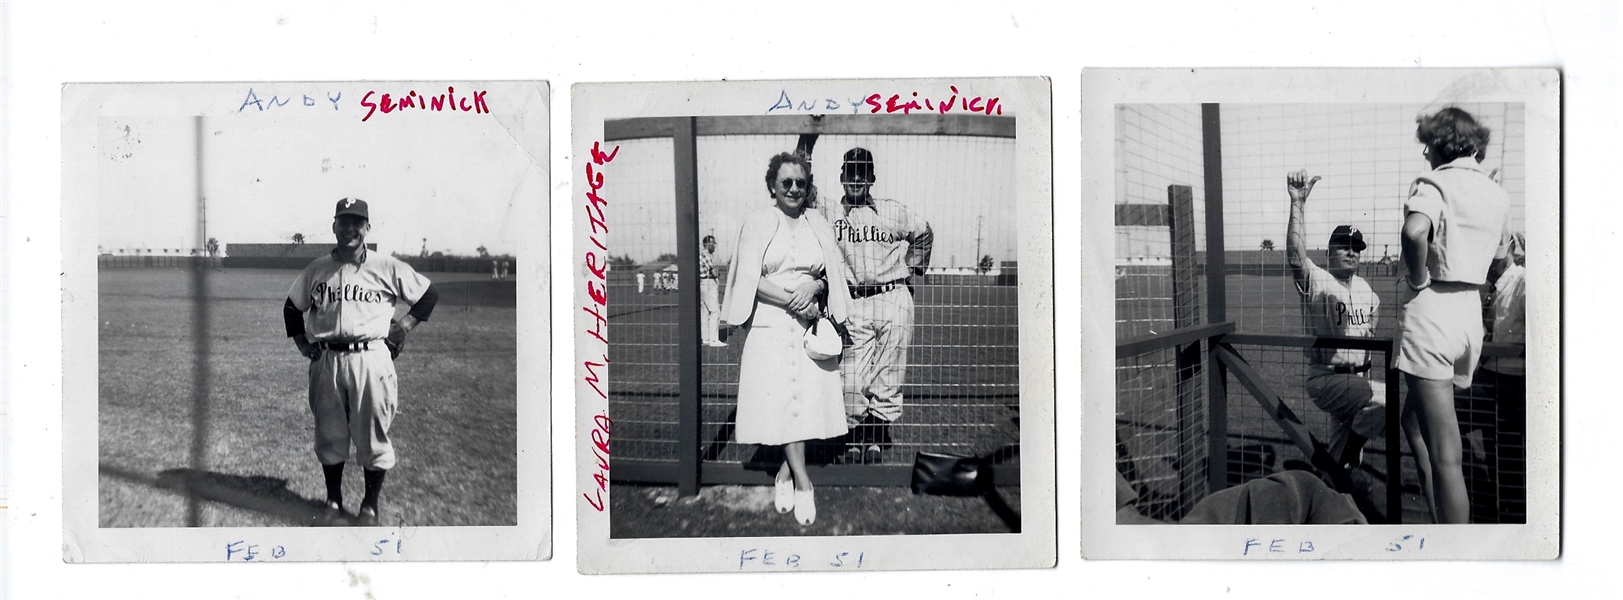 1951 Philadelphia Phillies Spring Training Photos with Andy Seminick